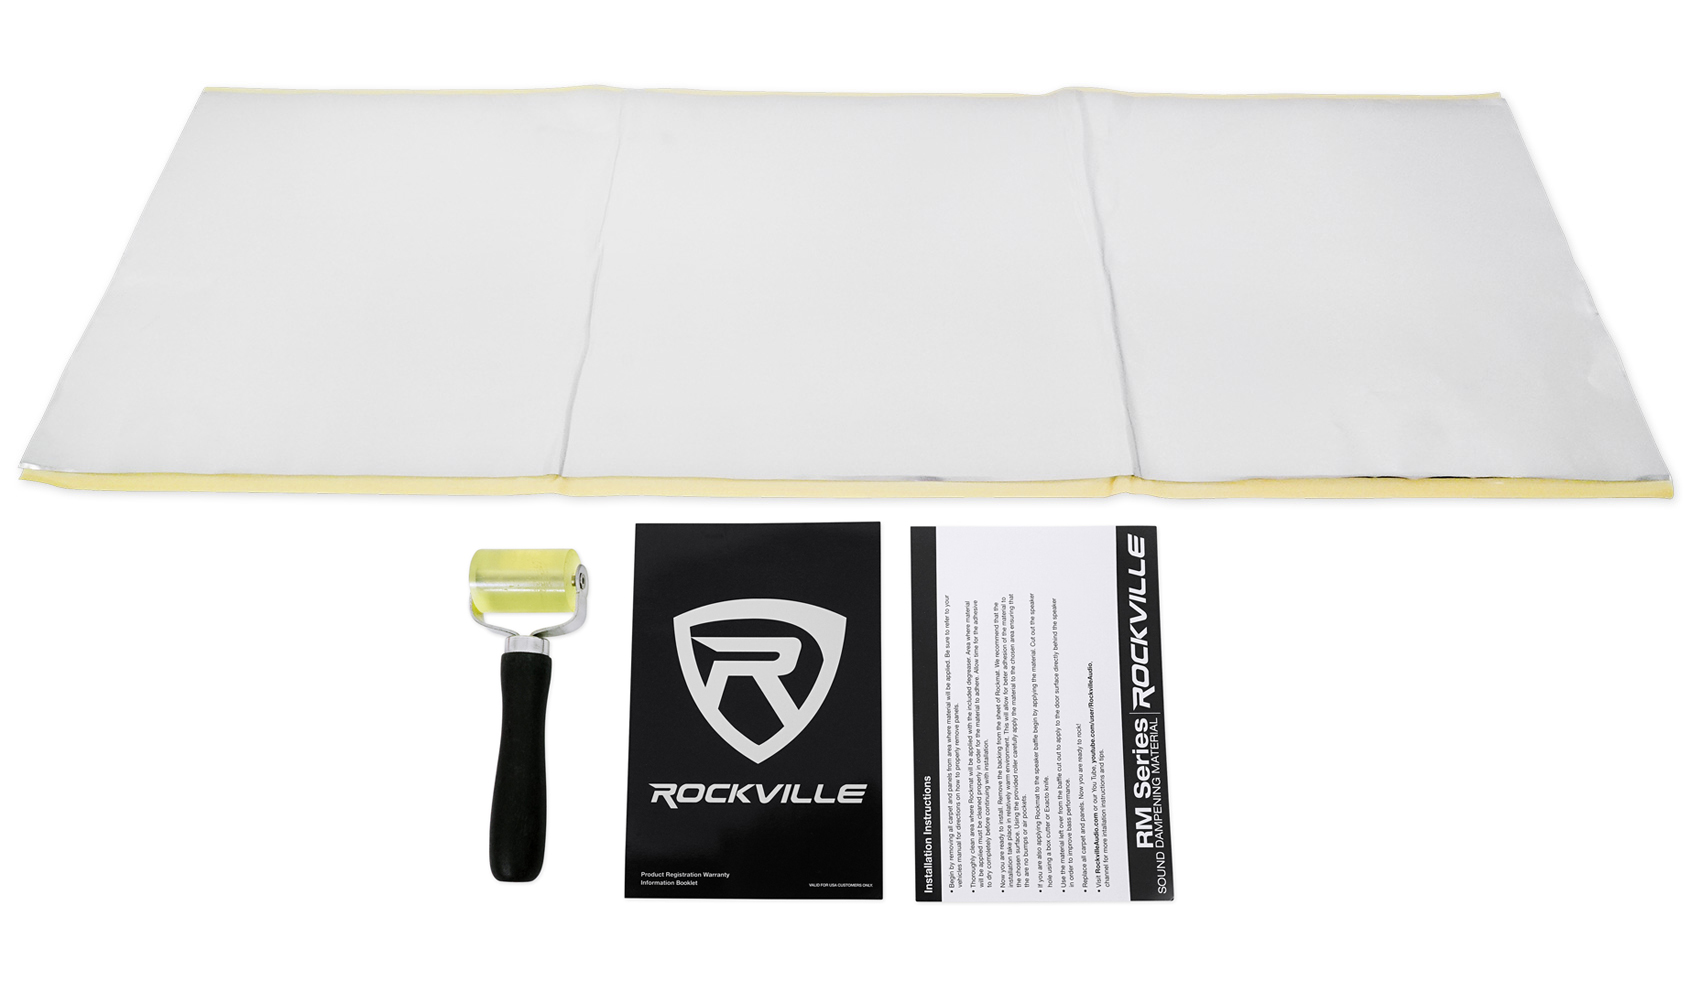 Rockville Rockmat RM12 12 Sq Ft Sound Dampening/Deadening Butyl Rubber Car  Kit 